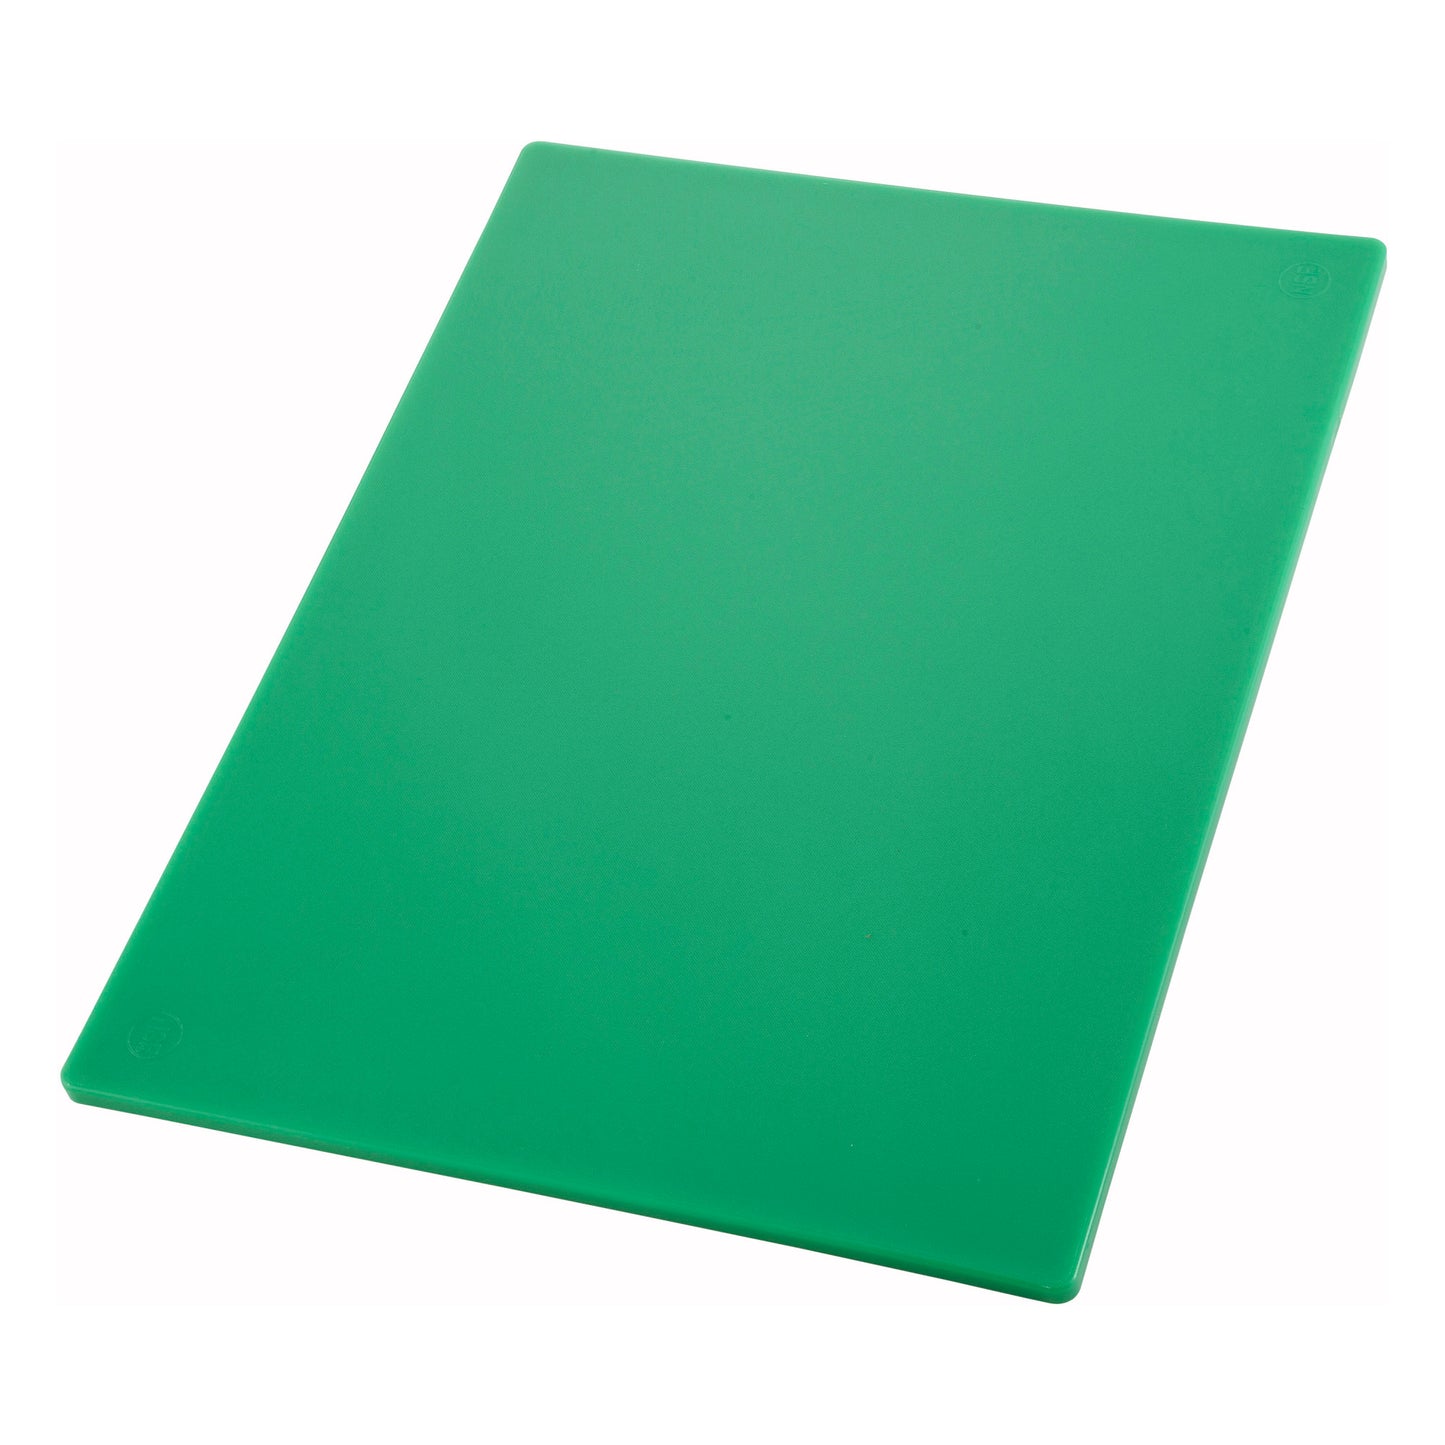 CBGR-1218 - HACCP Color-Coded Cutting Board - 12 x 18, Green